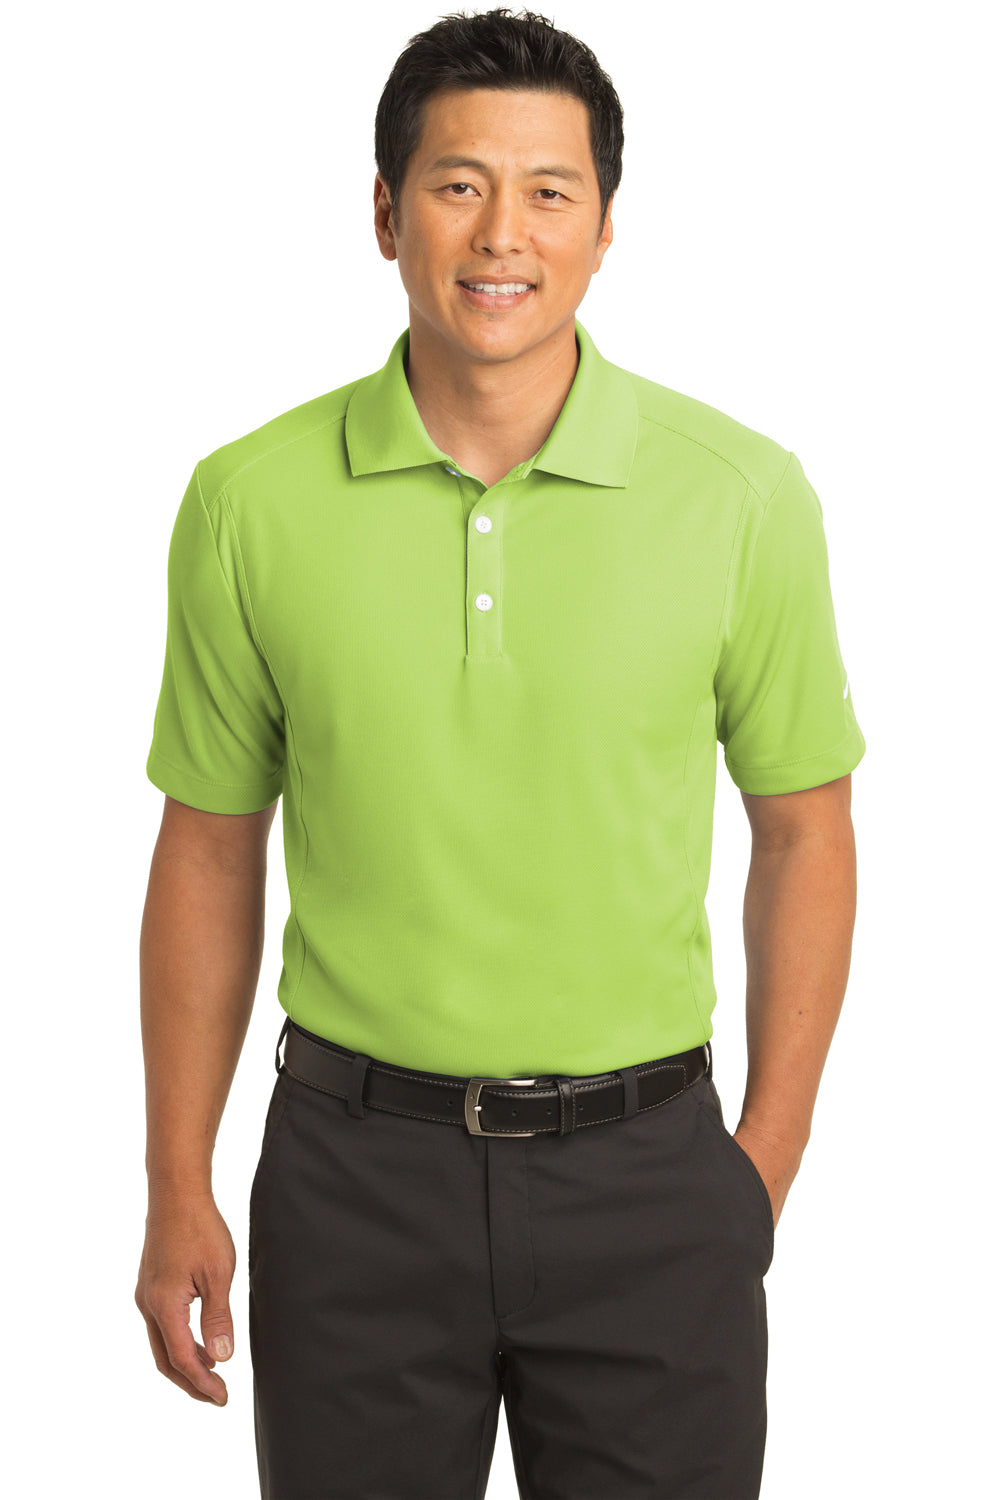 Nike 267020 Mens Classic Dri-Fit Moisture Wicking Short Sleeve Polo Shirt Vivid Green Front